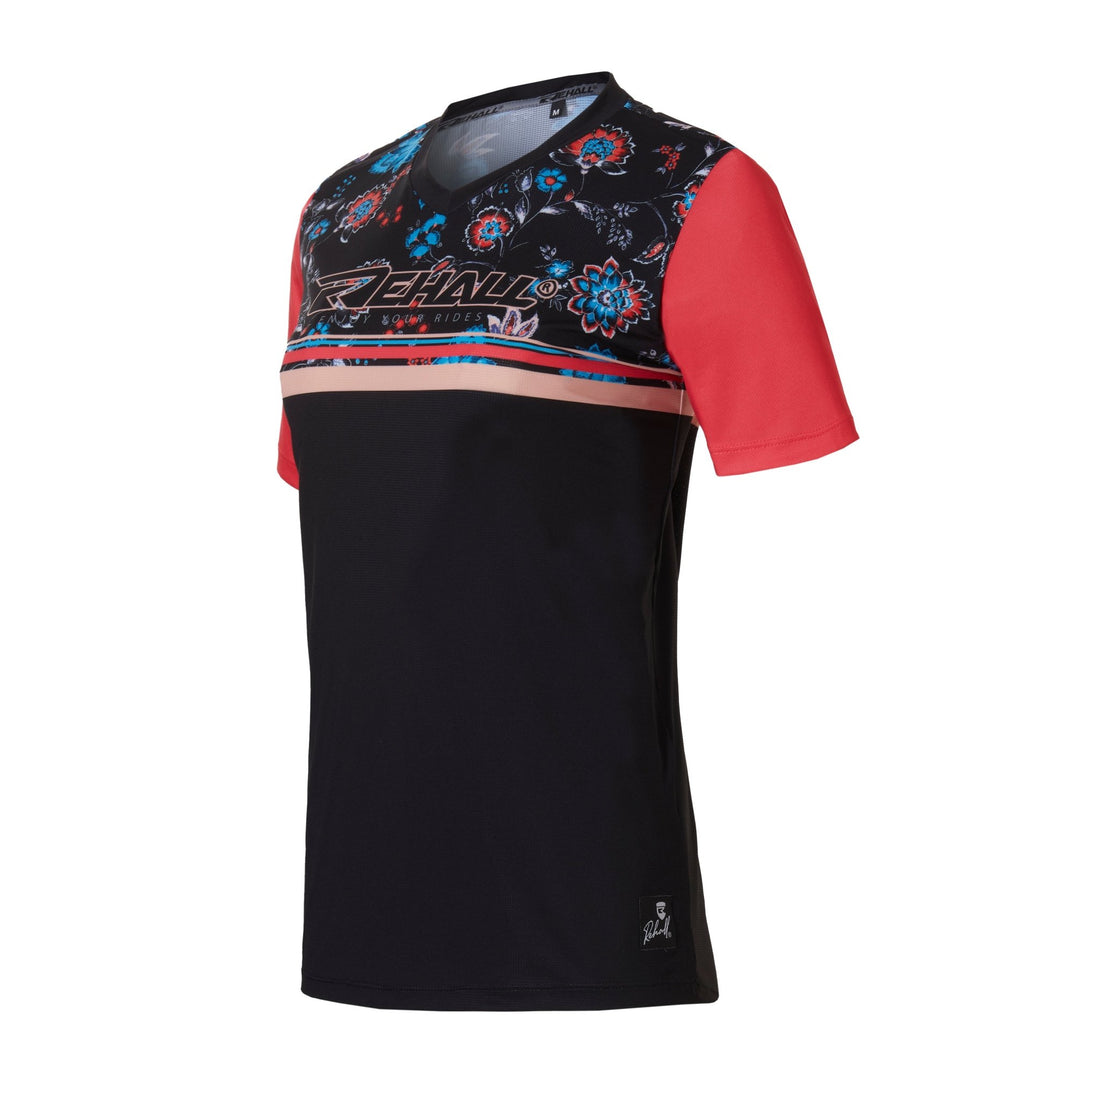 LOISA-R Bike T-Shirt Shortsleeve - World of Alps